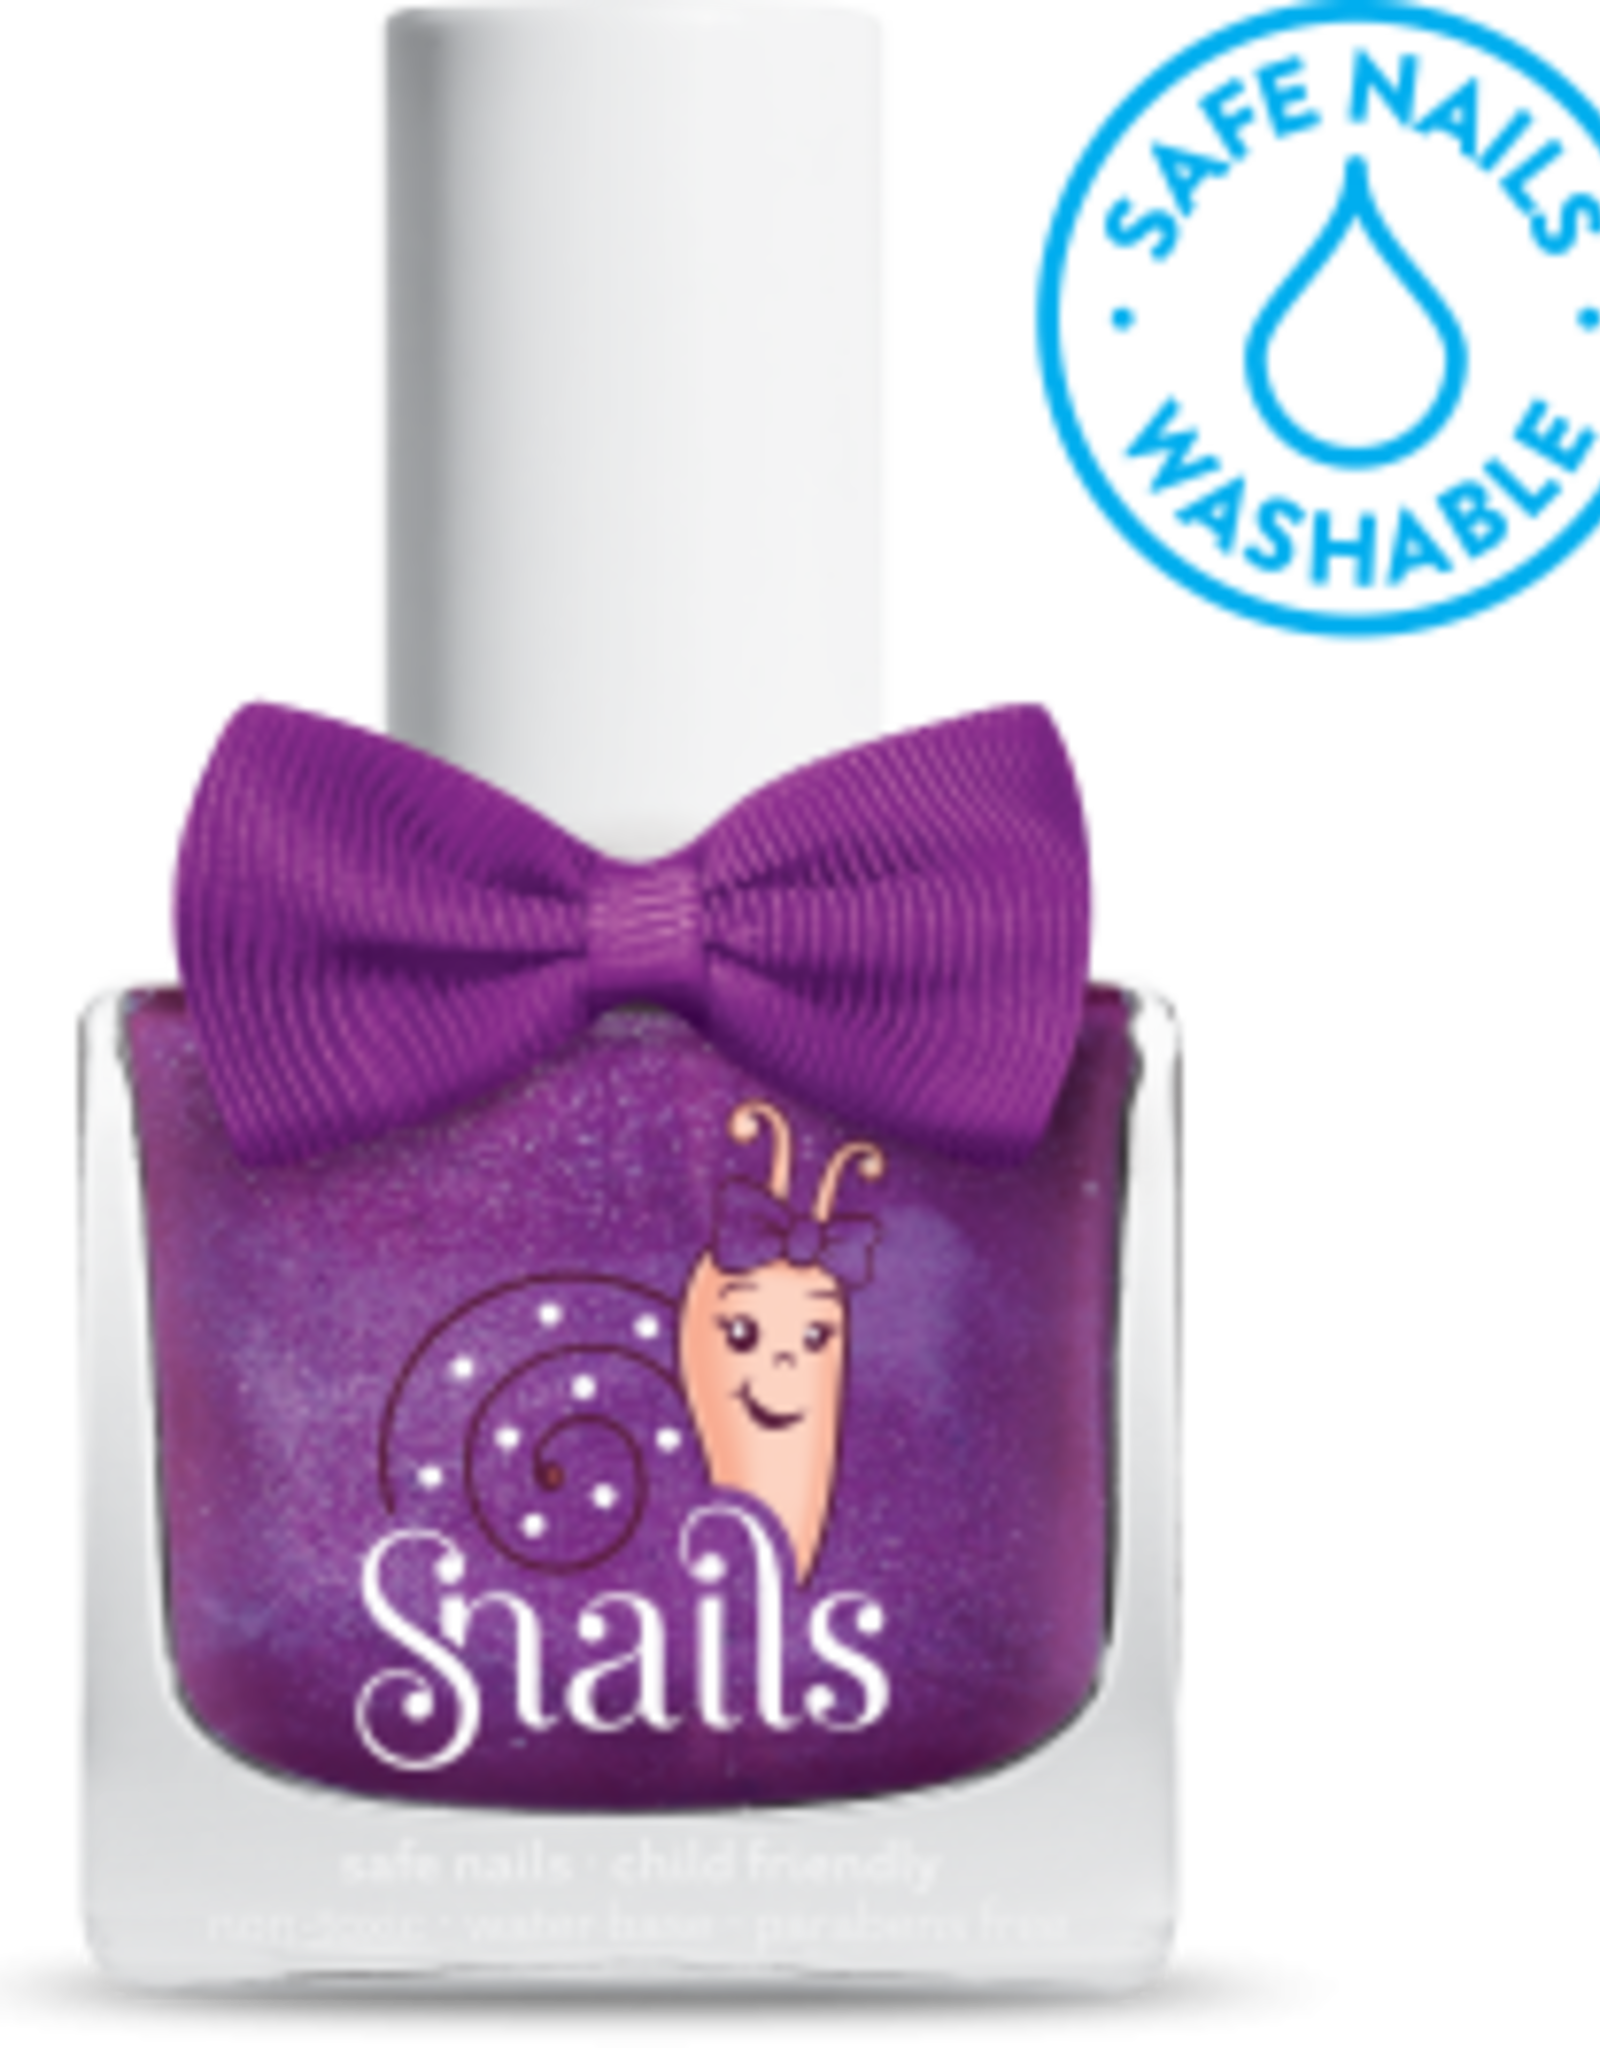 Snails Snails waterafwasbare nagellak - Rasberry Pie 10.5ml